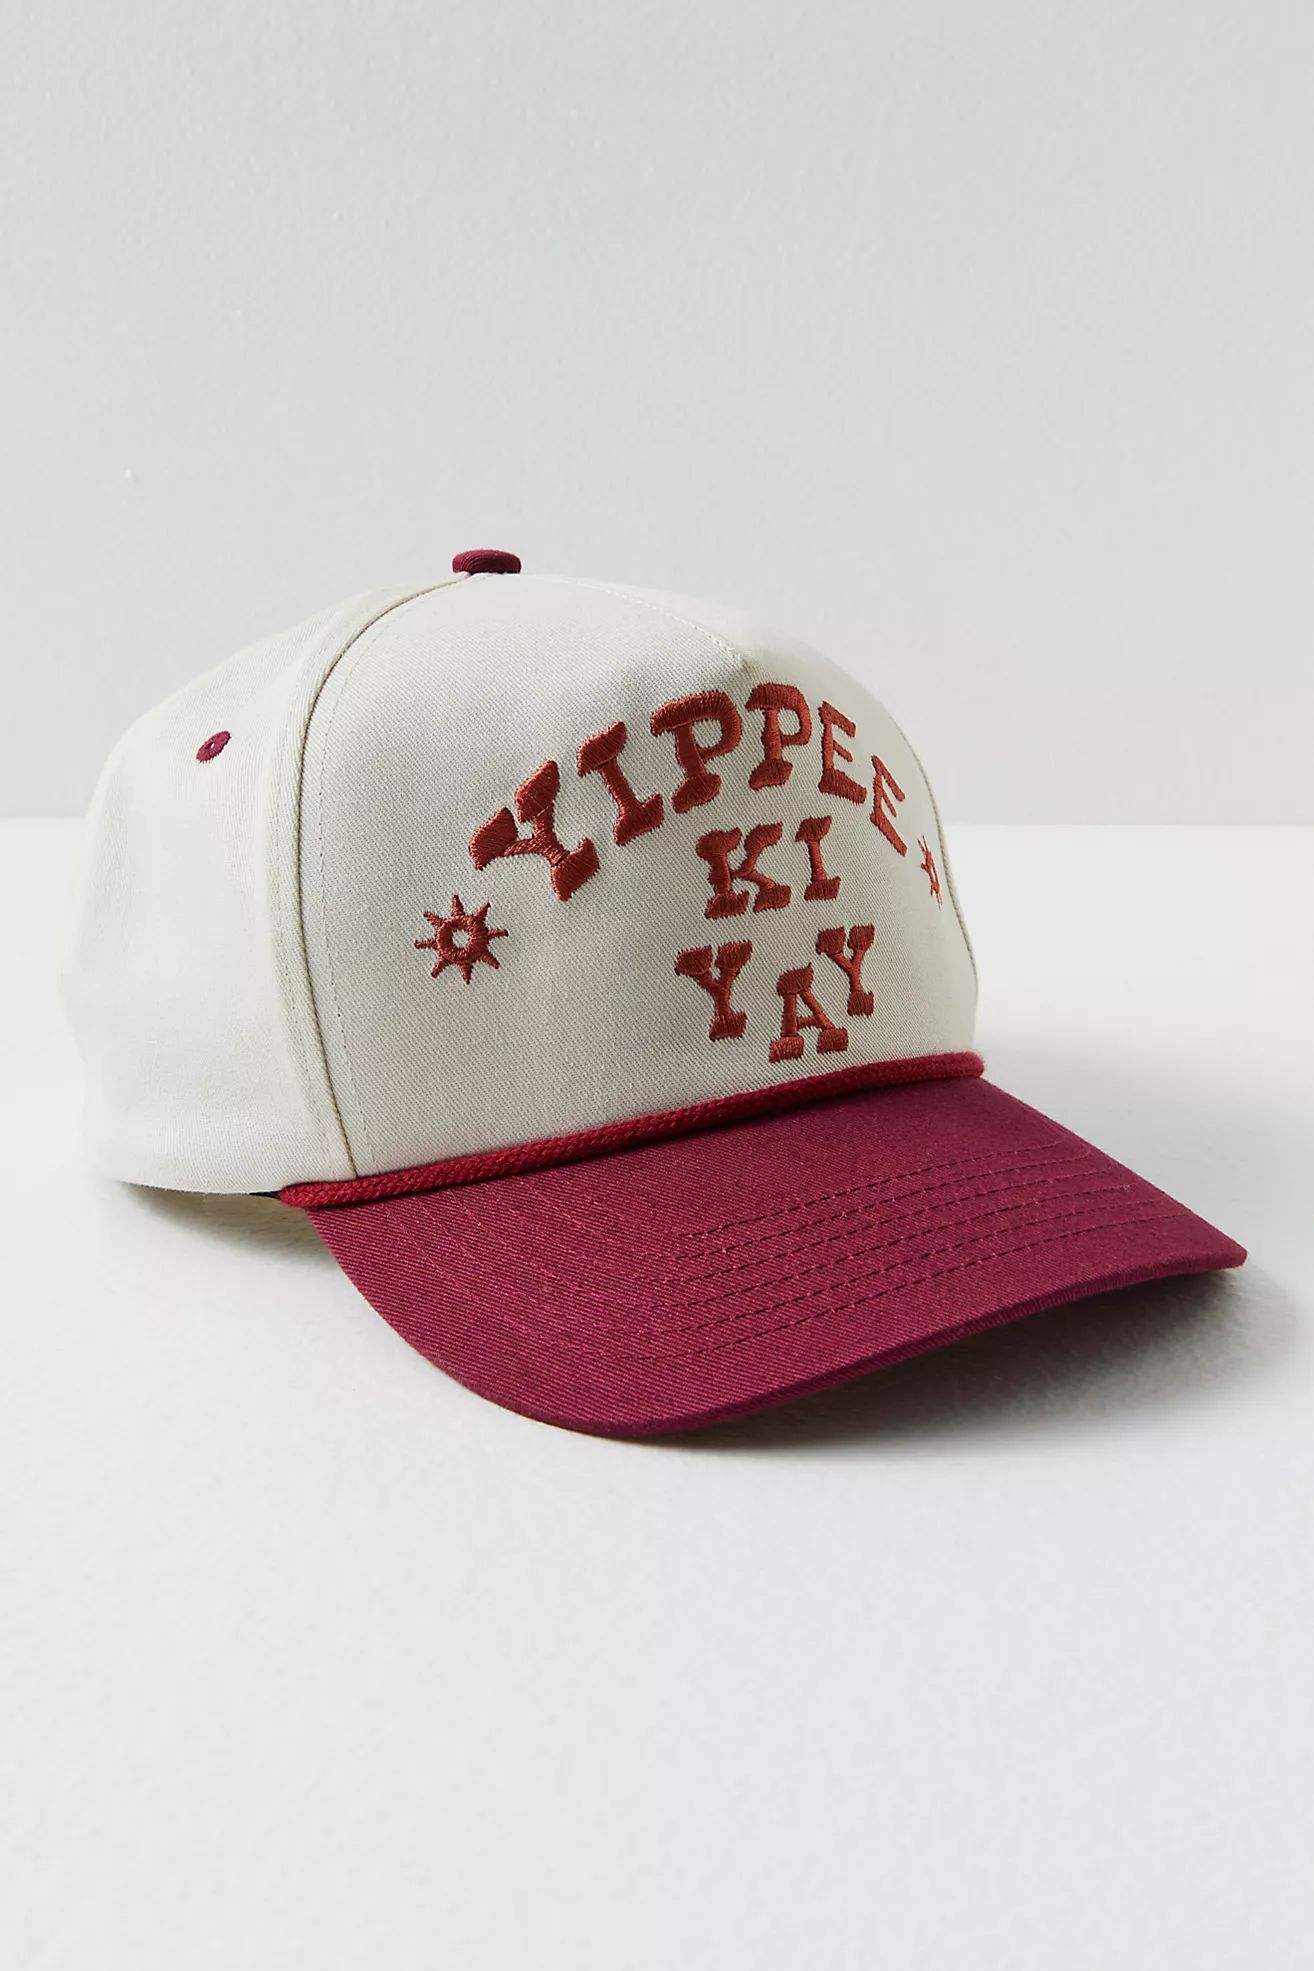 Yippee Ki Yay Baseball Hat | Free People (Global - UK&FR Excluded)